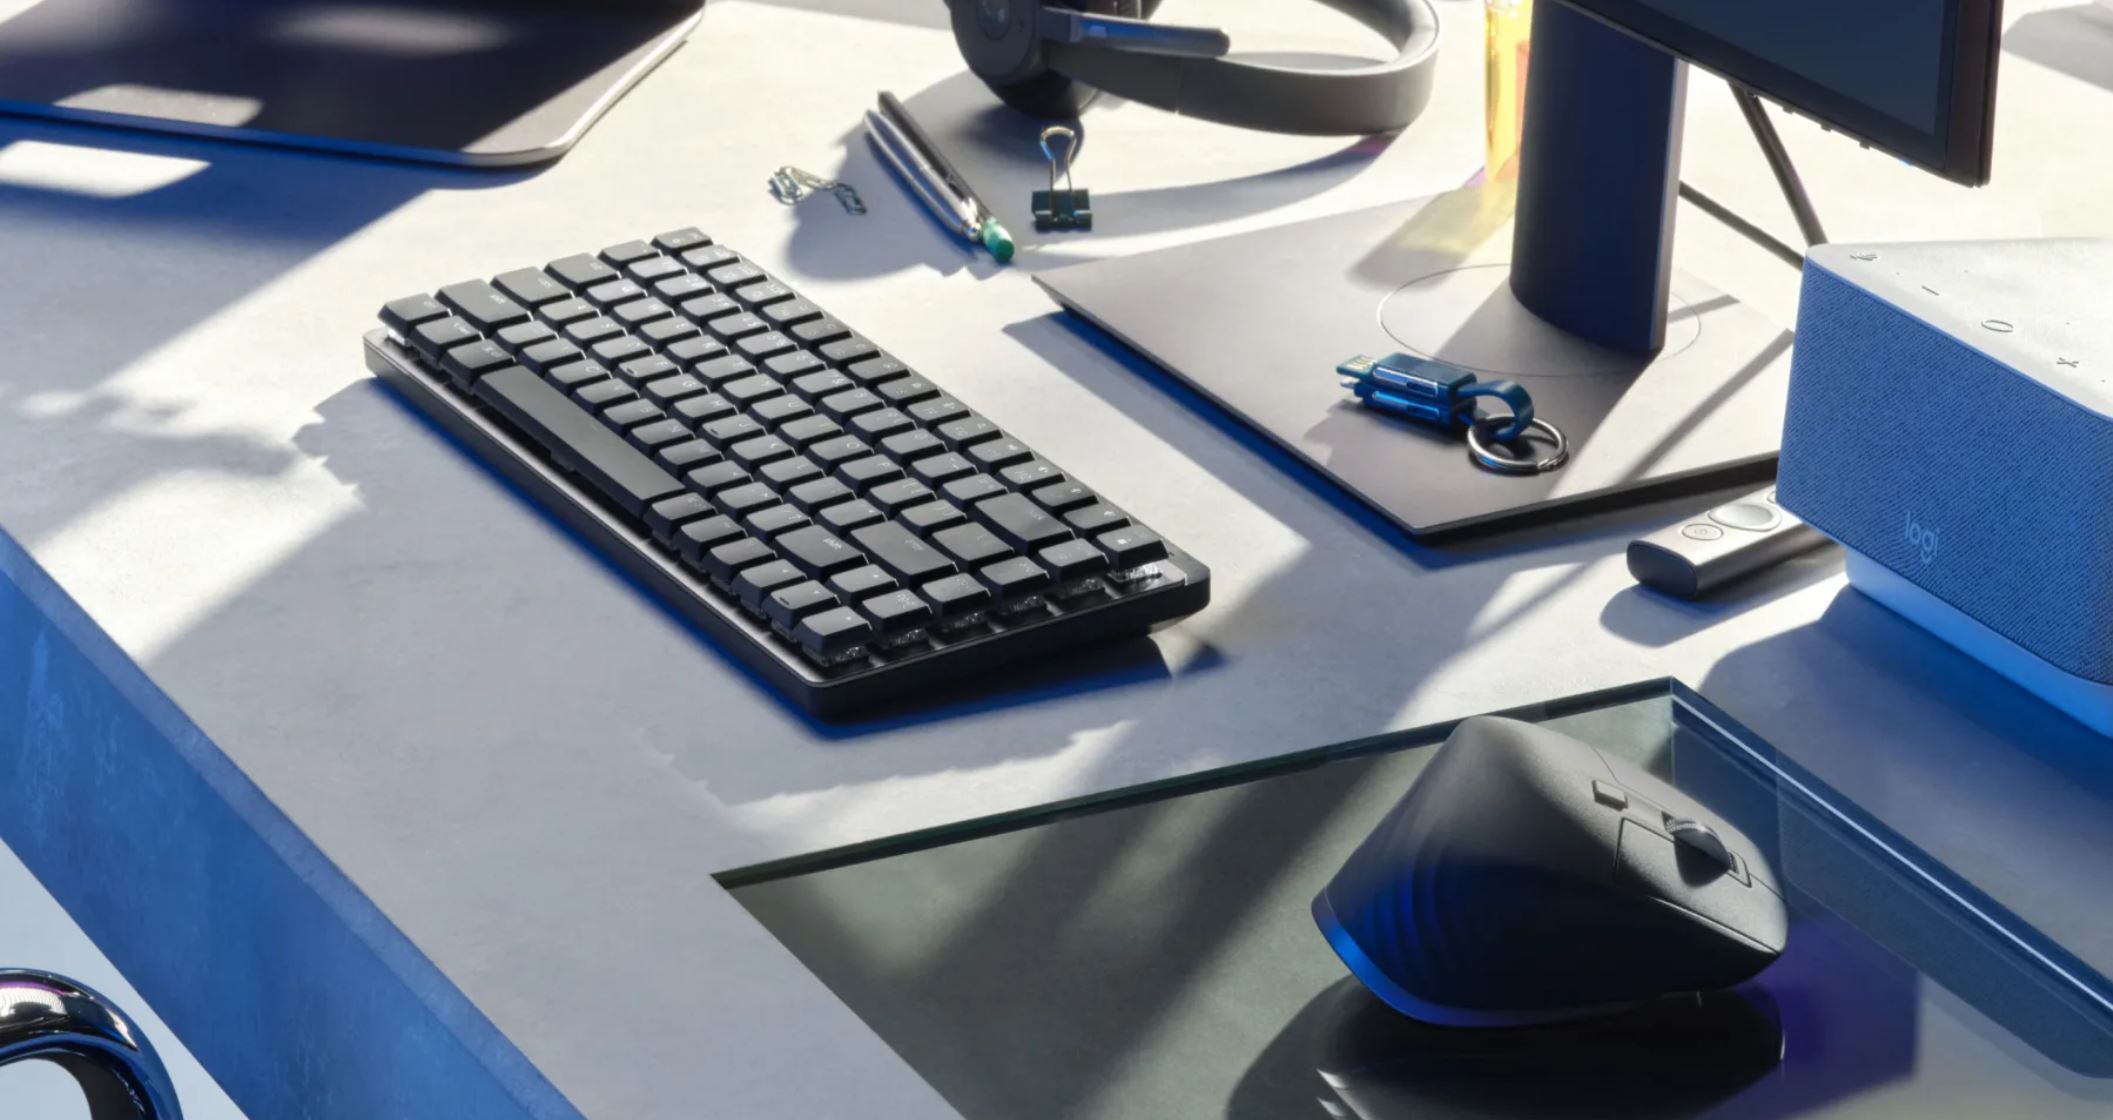 A keyboard is placed on a desktop